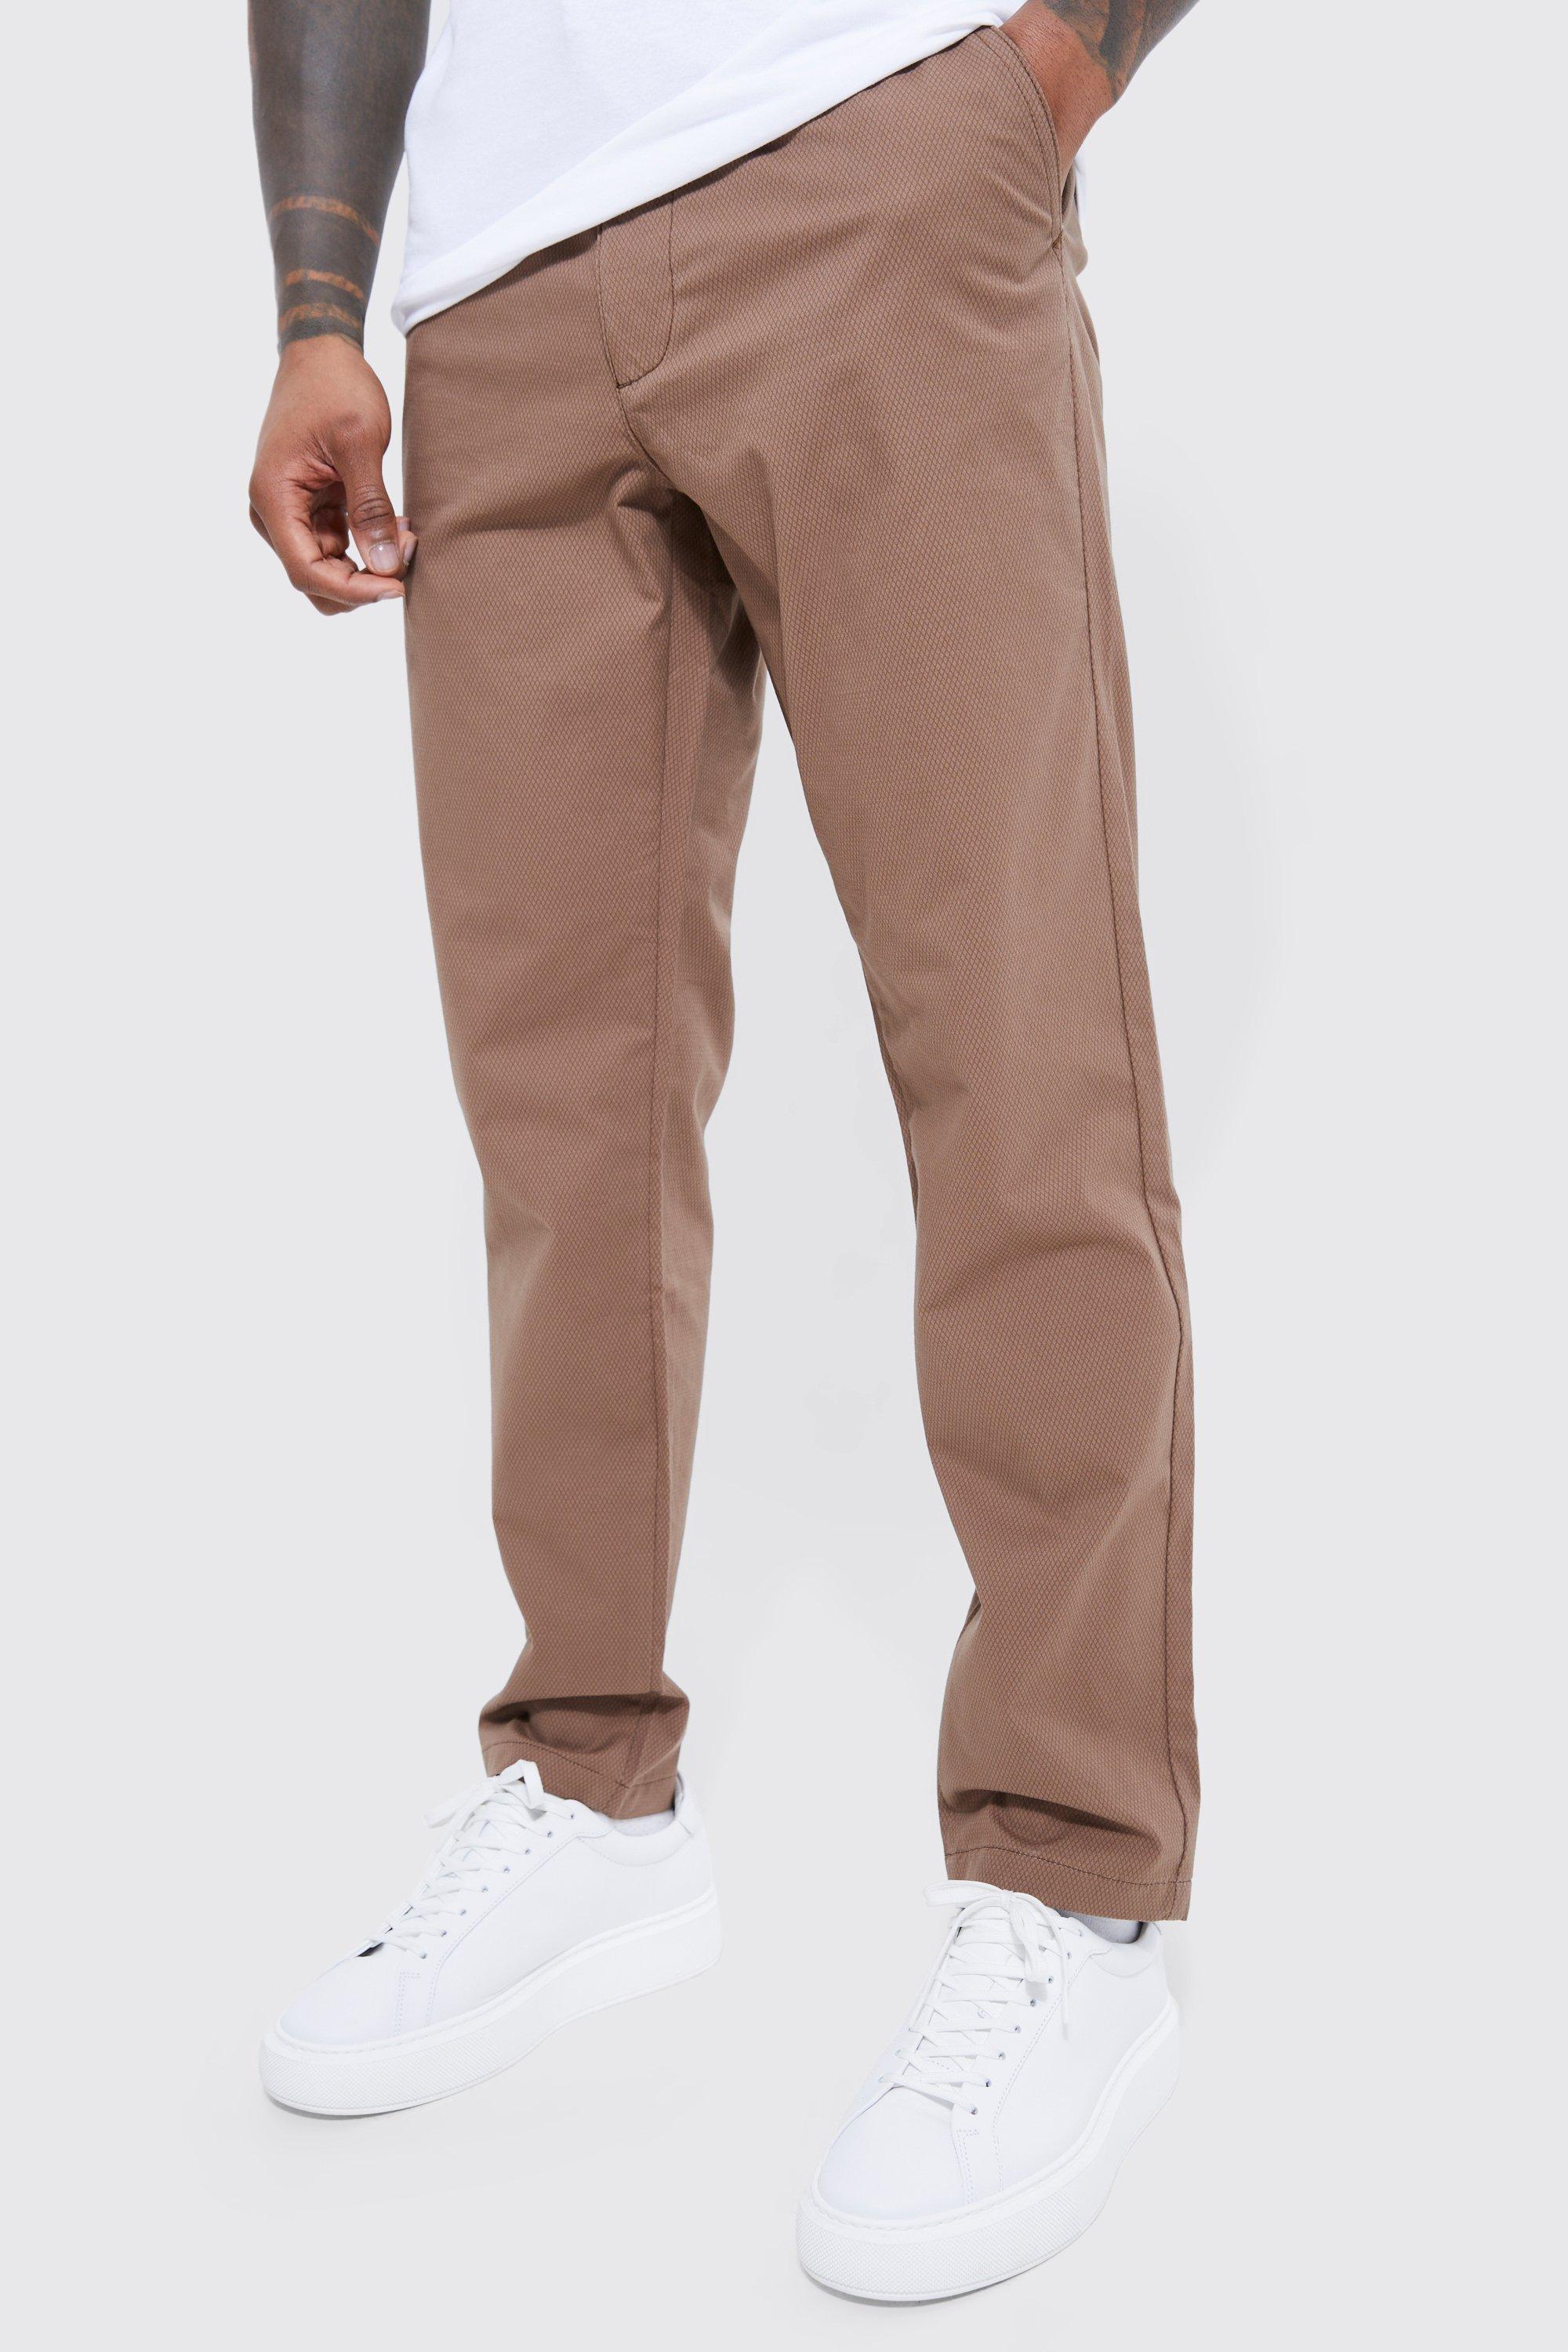 pantalon chino slim texturé homme - brun - 28, brun